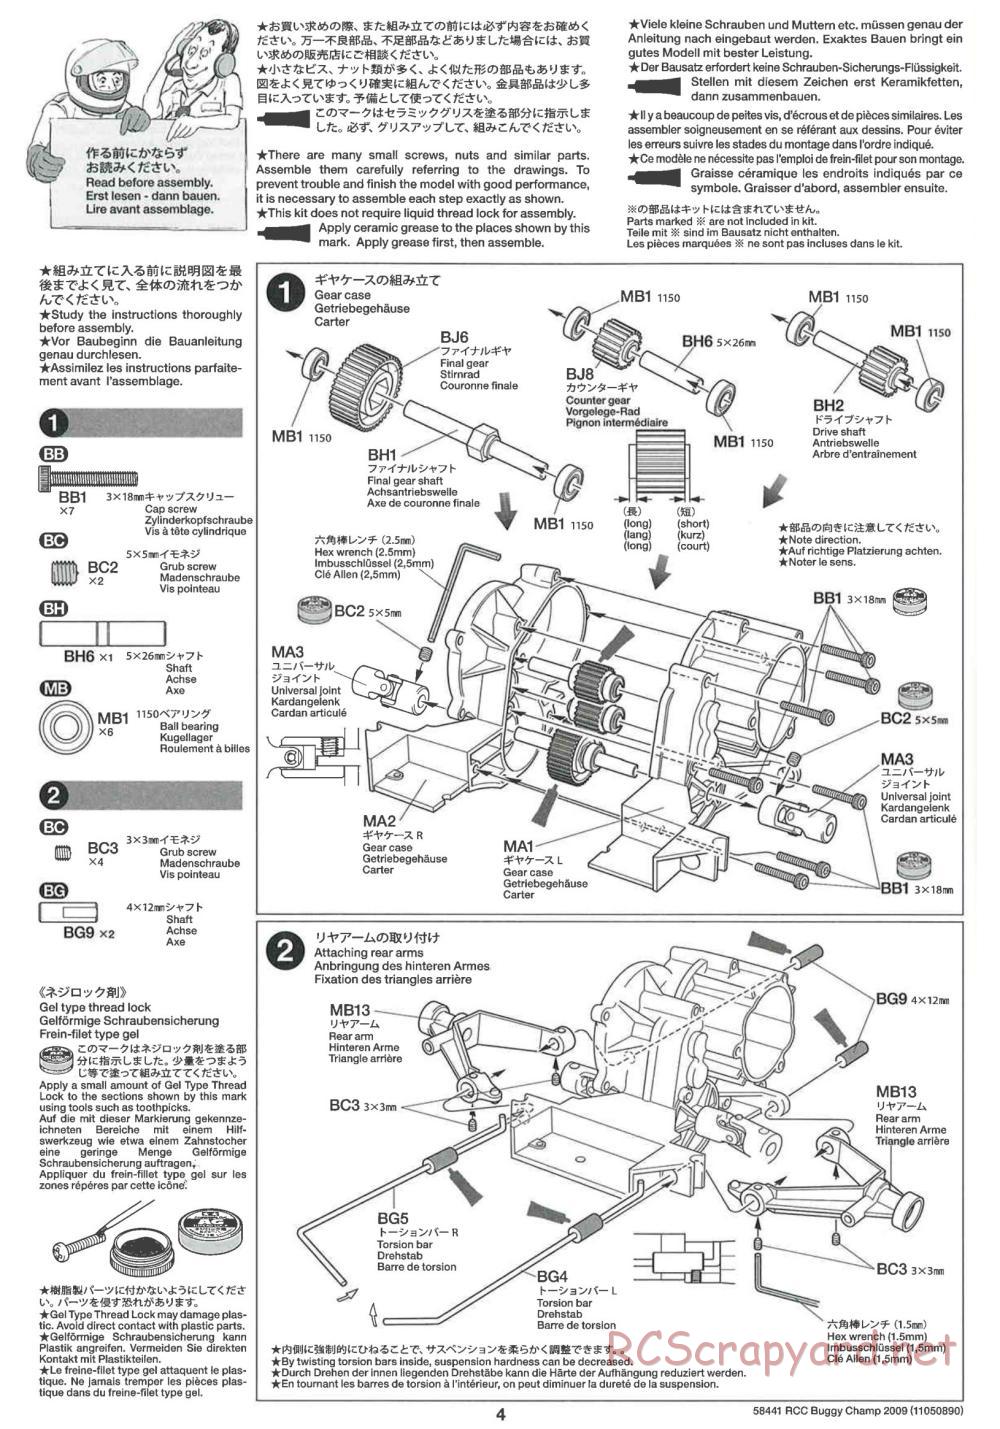 Tamiya - Buggy Champ Chassis - Manual - Page 4